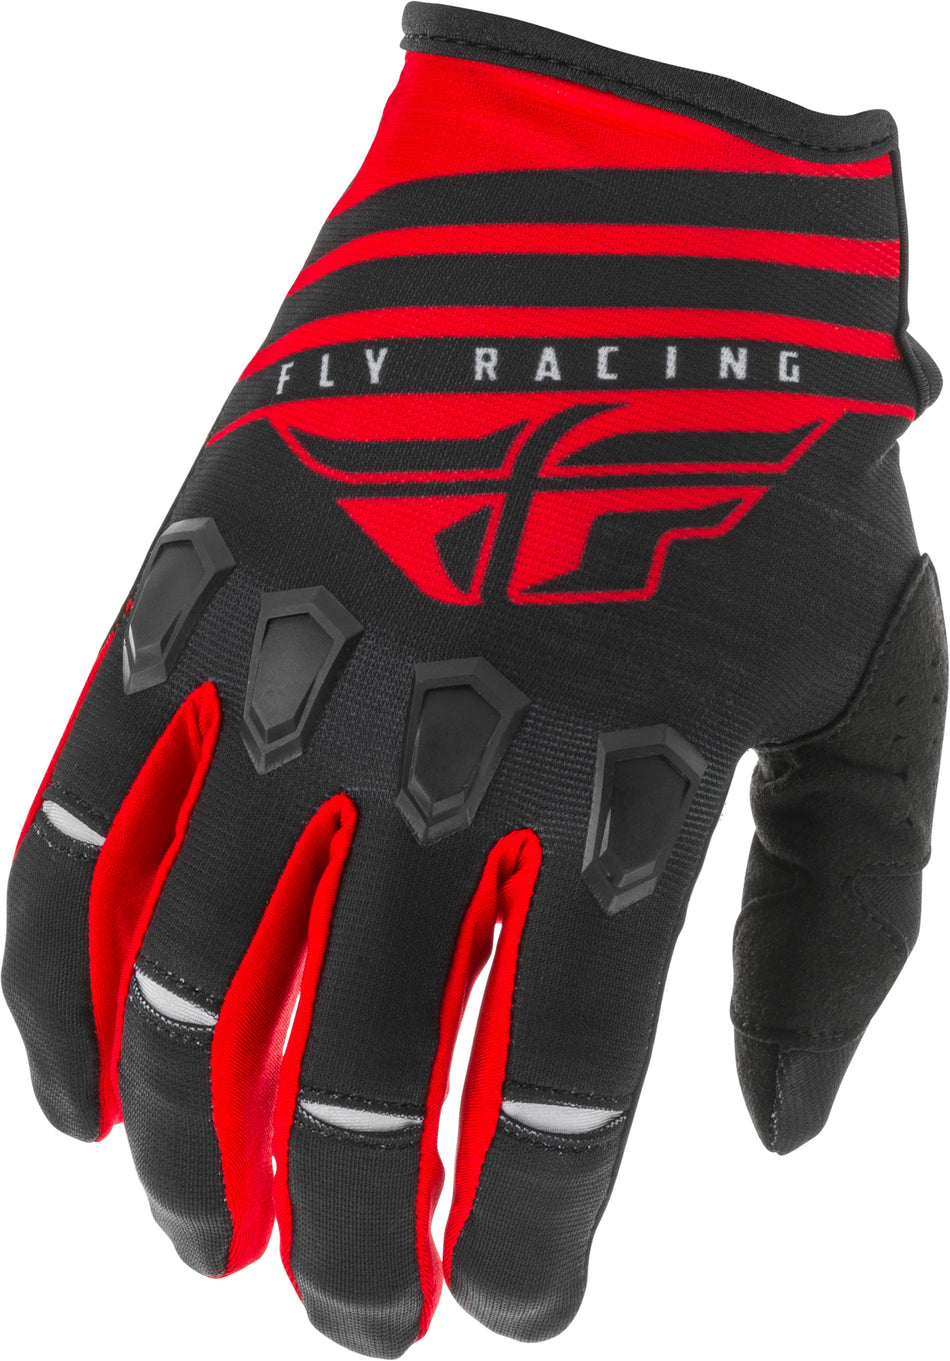 FLY RACING Kinetic K220 Gloves Red/Black/White Sz 04 373-51304